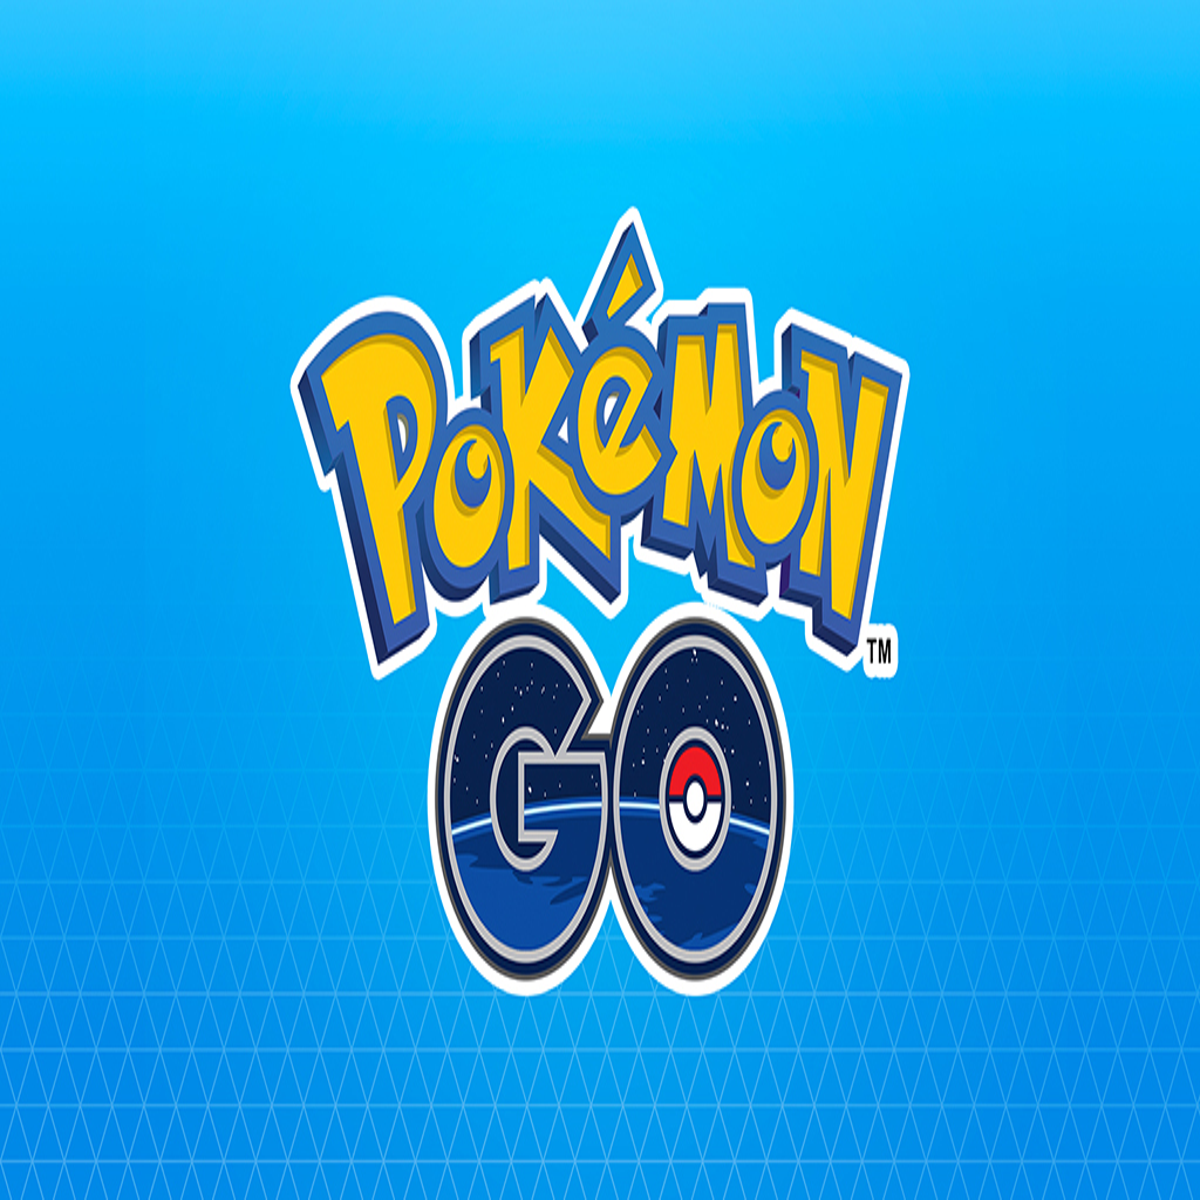 Pokémon Go remote raid passes, buddy gifts, and bonus research coming soon  - Polygon